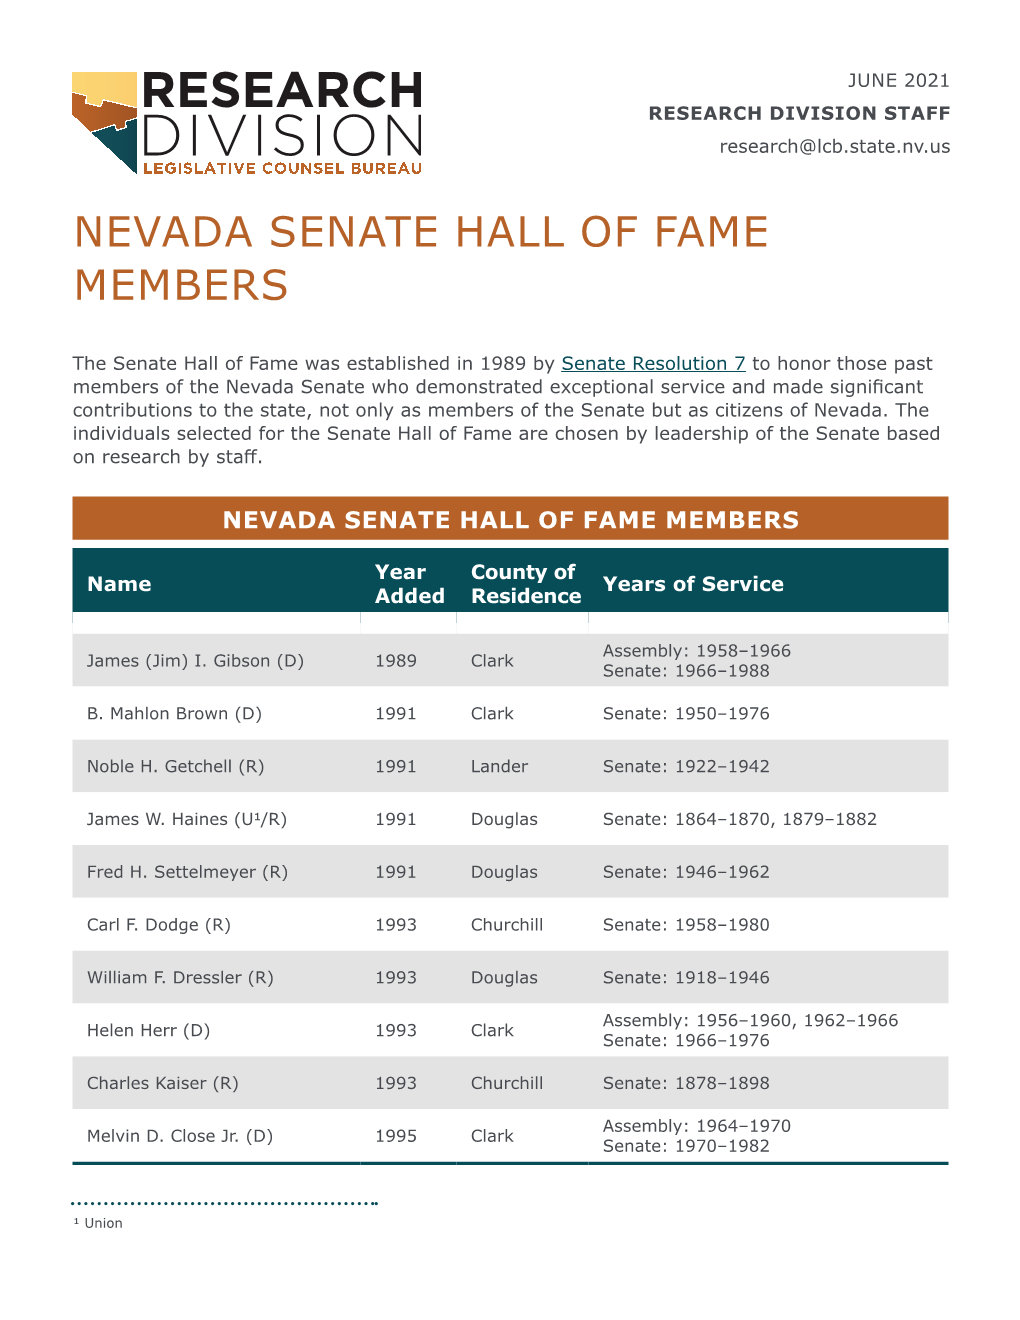 Nevada Senate Hall of Fame Members